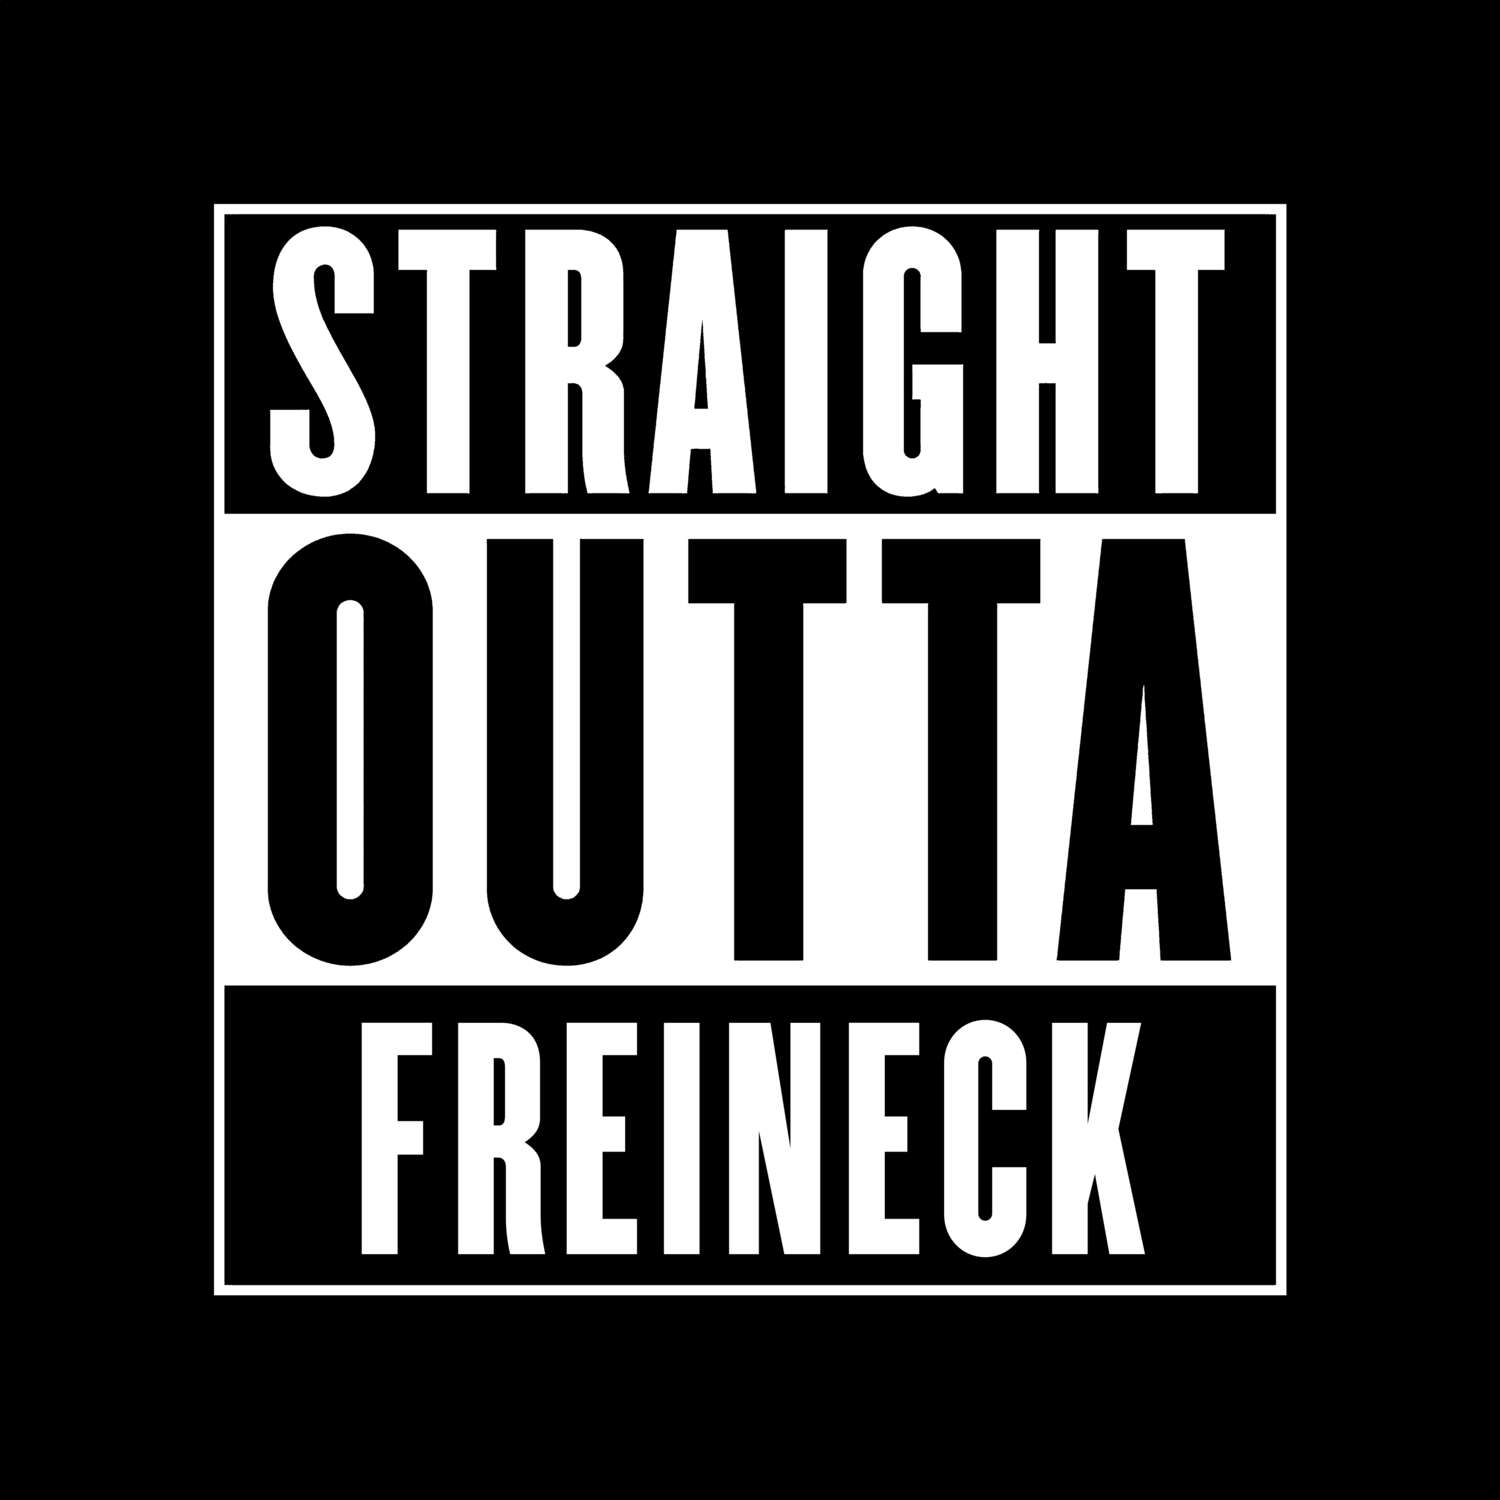 Freineck T-Shirt »Straight Outta«